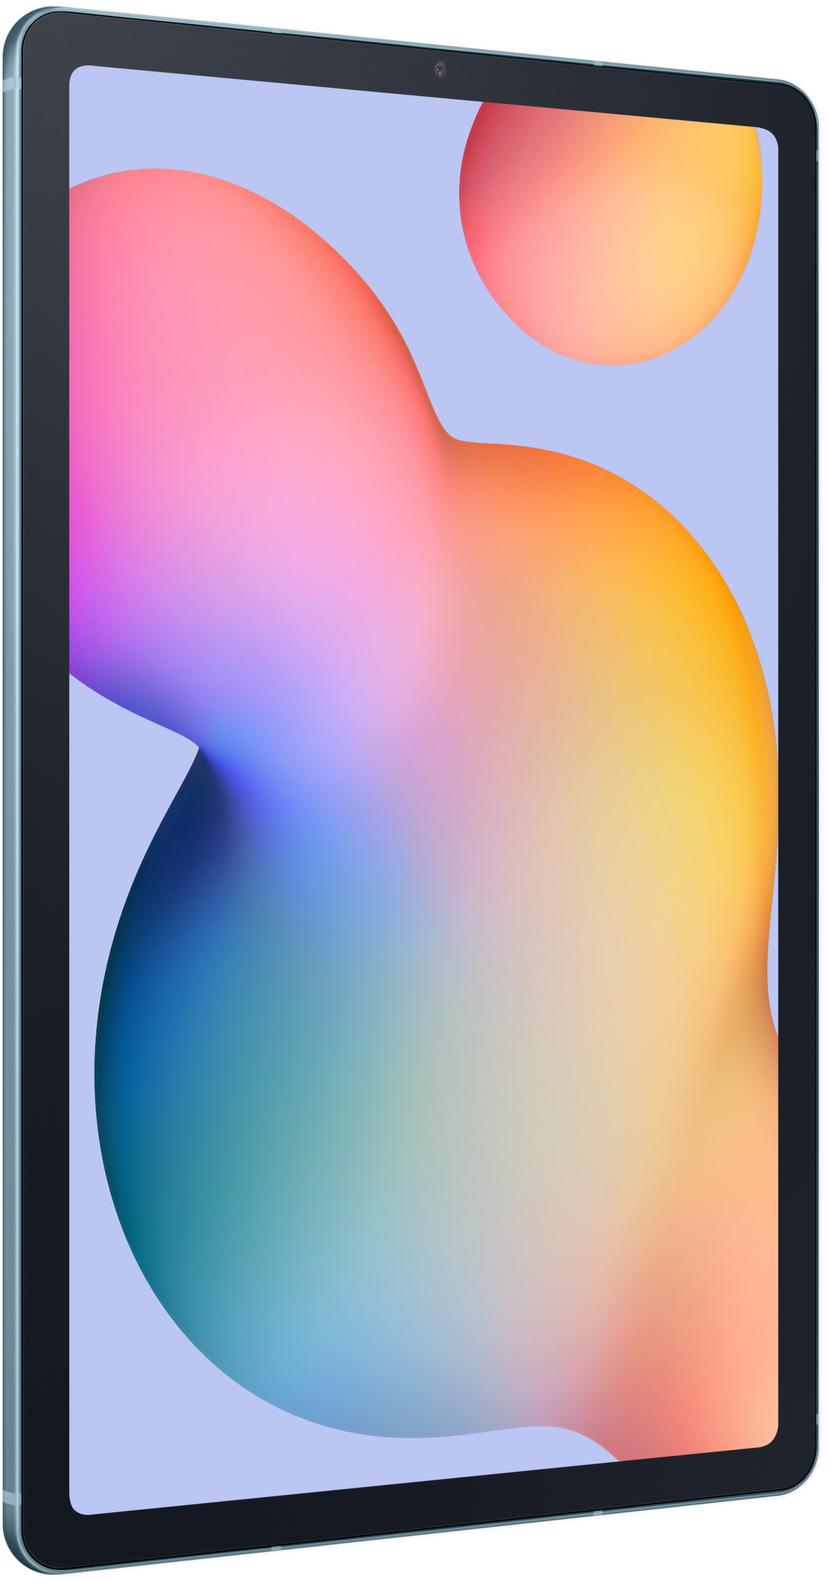 Samsung Galaxy Tab S6 Lite 4G 10.4" Snapdragon 720G 64GB Angoransininen